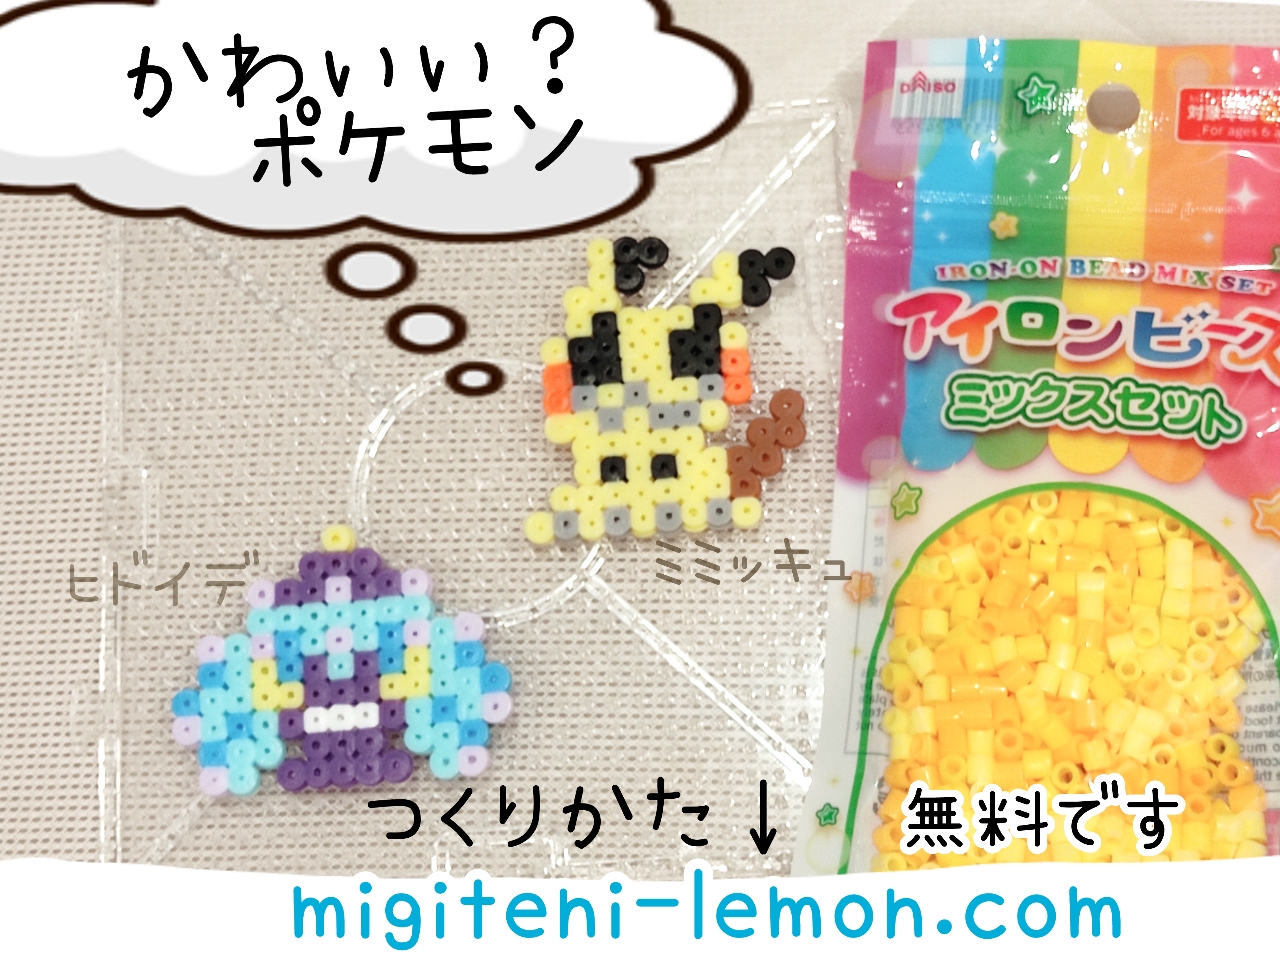 mimikkyu-mimikyu-hidoide-mareanie-pokemon-beads-zuan